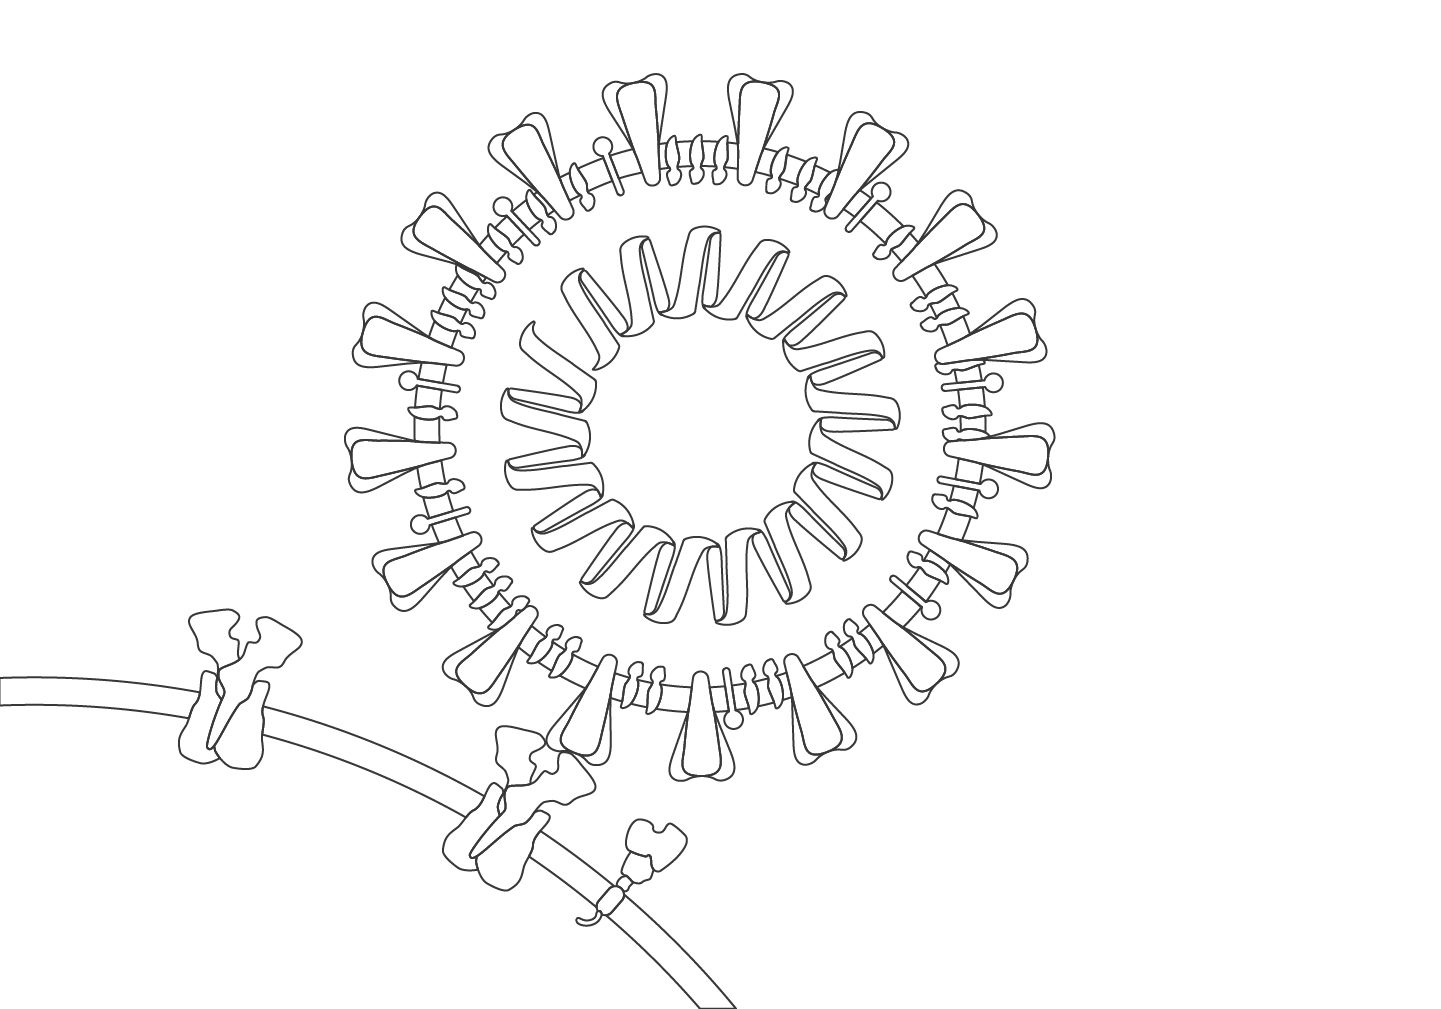 Free SARS-CoV-2 and receptor illustration